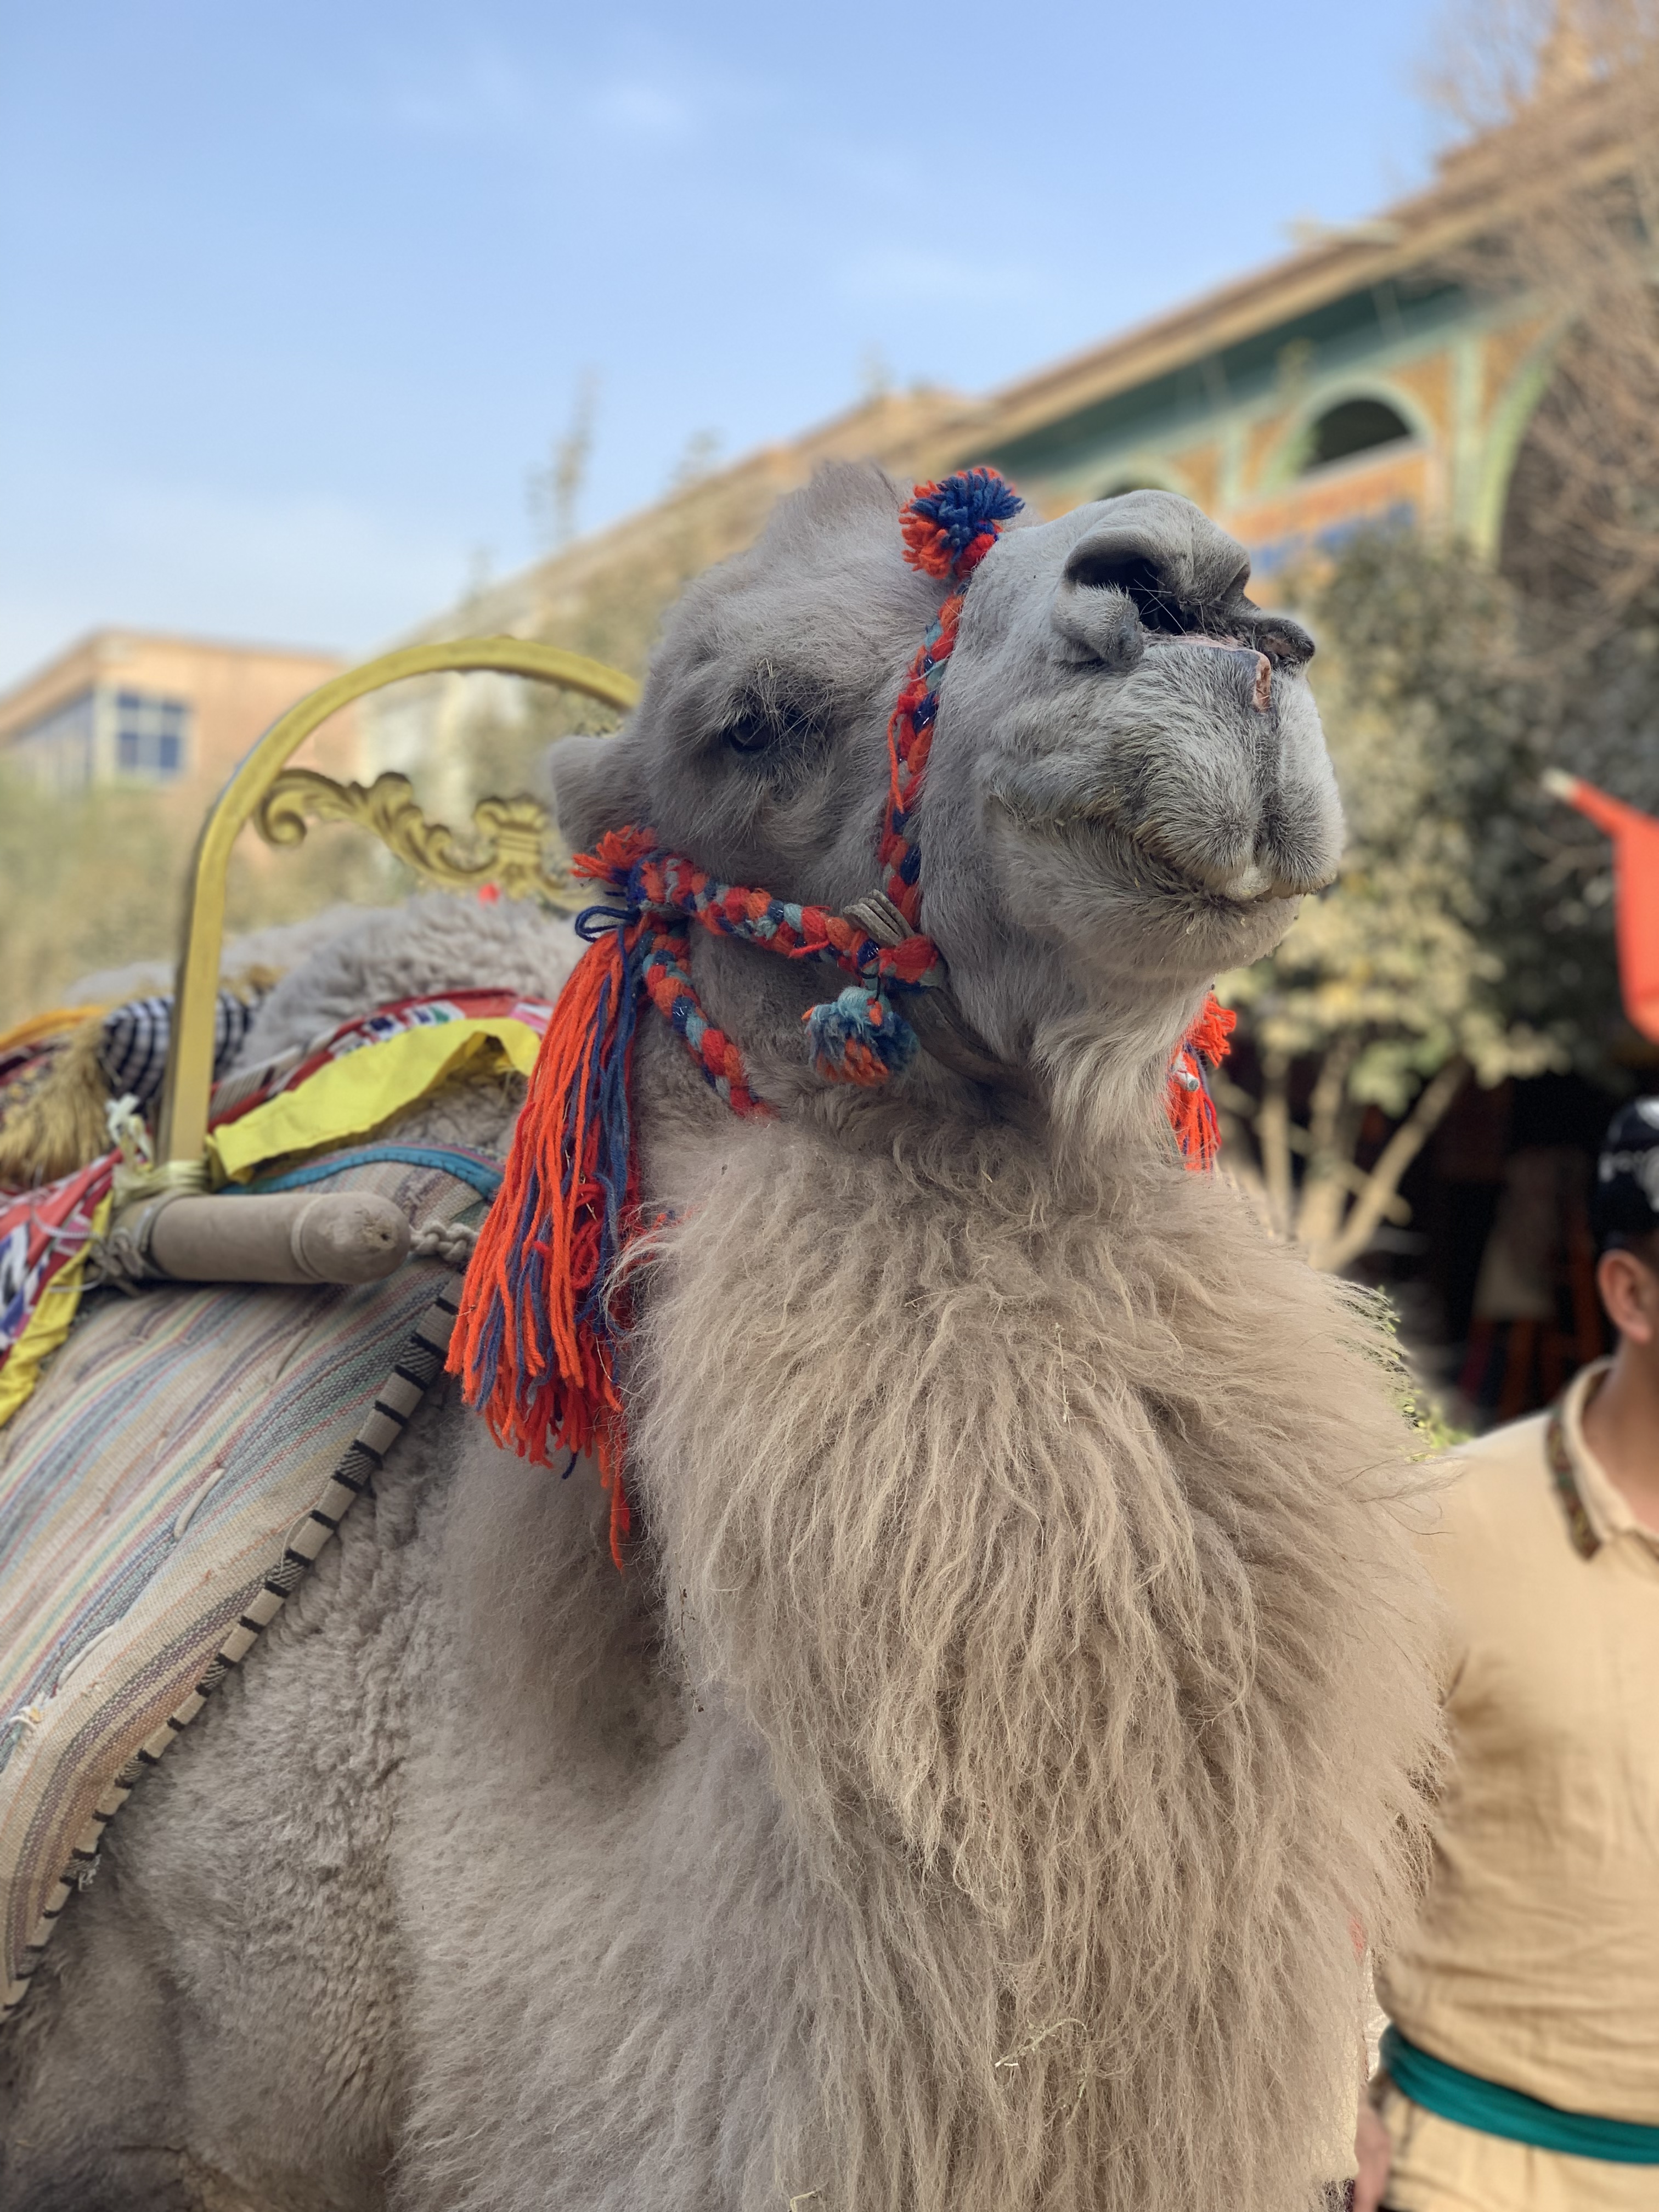 A photo shows a camel in the ancient city of Kashgar, Xinjiang. /CGTN